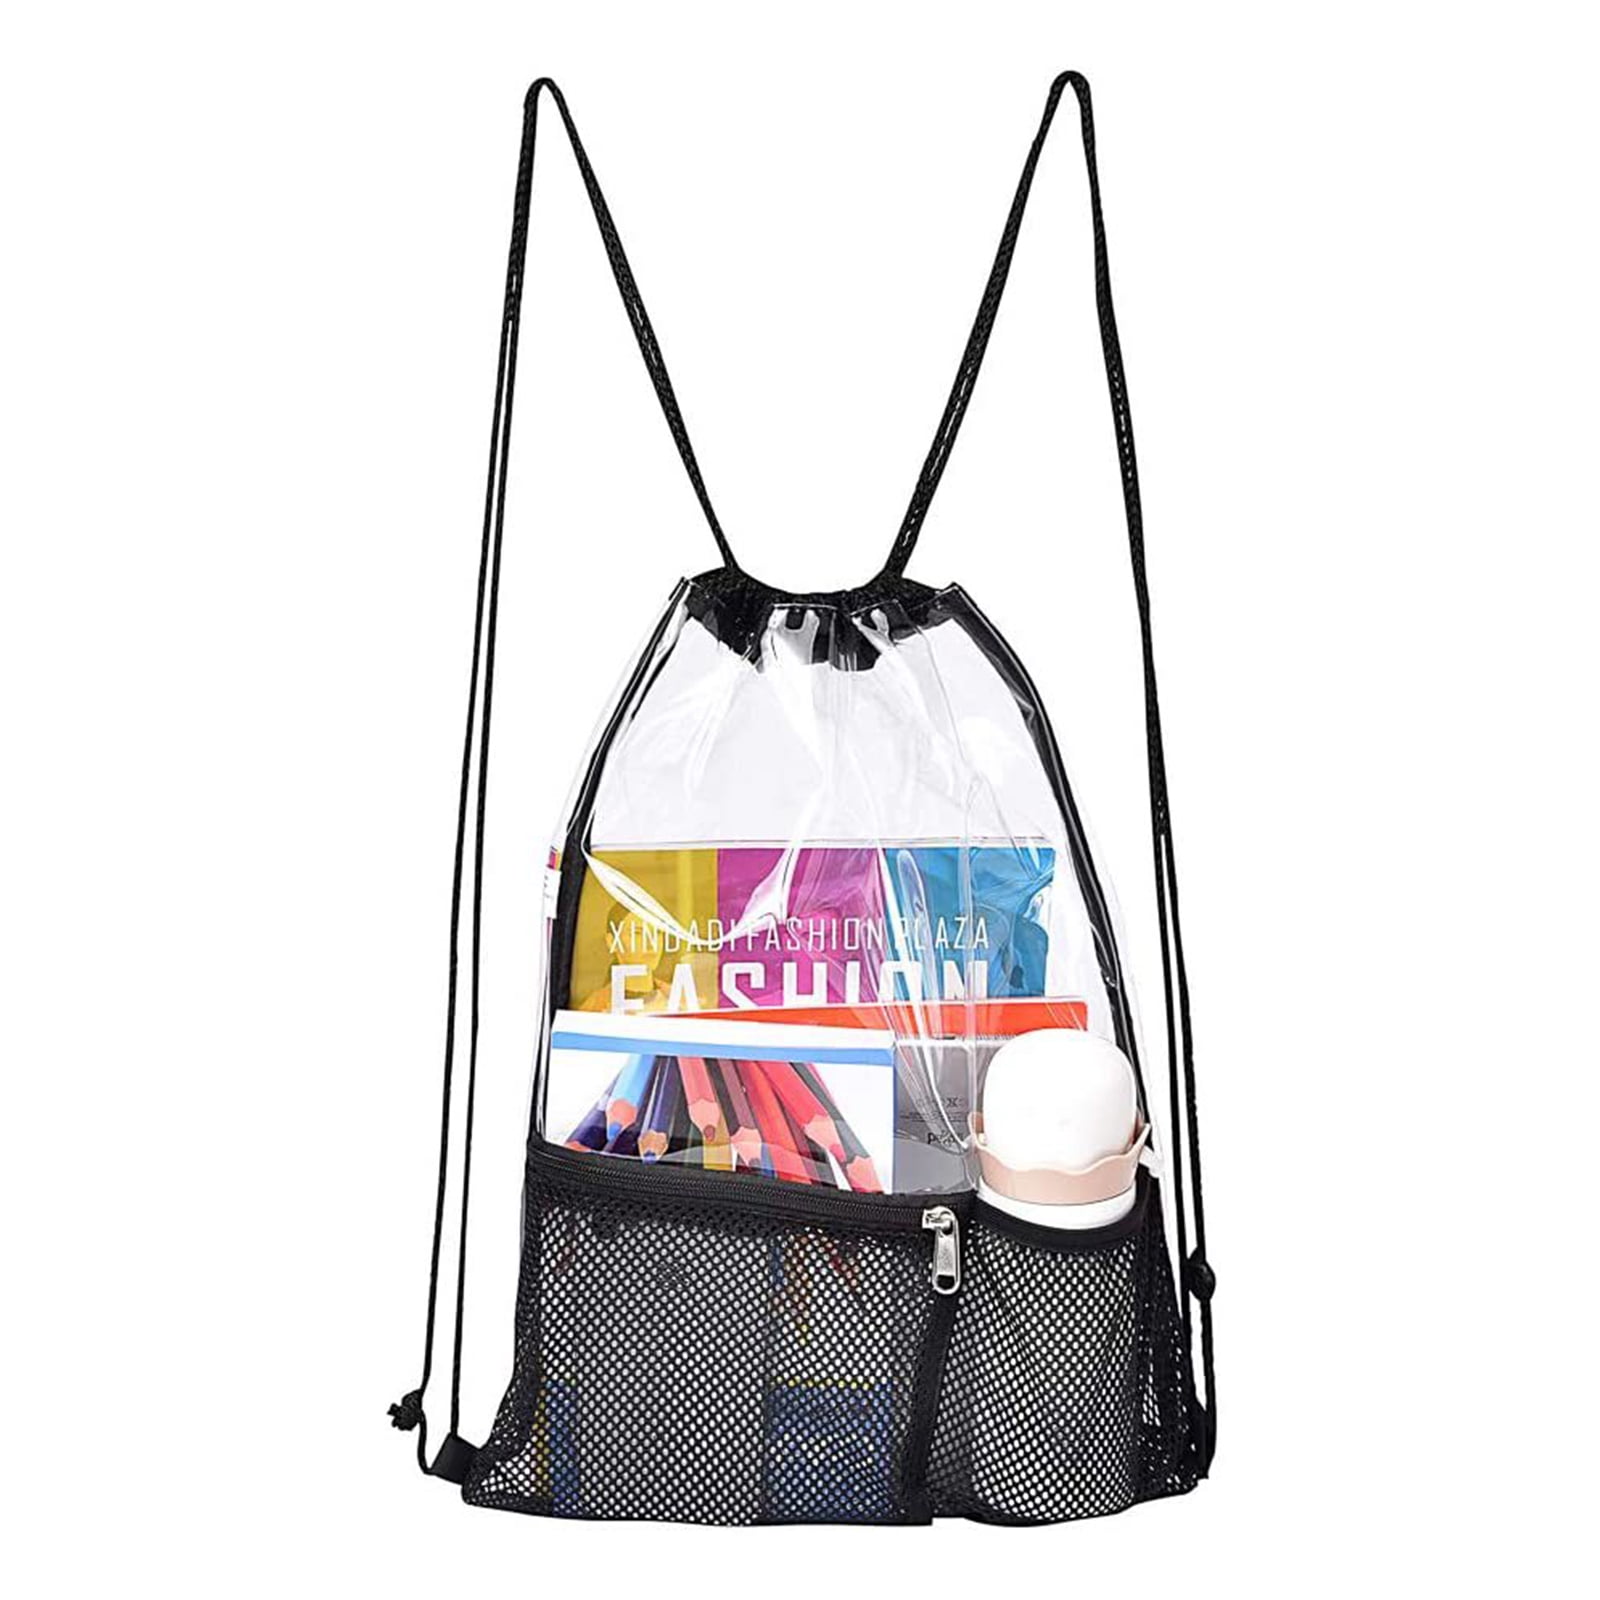 Women Transparent Waterproof Backpack Drawstring Bag Clear PVC Beach Travel 